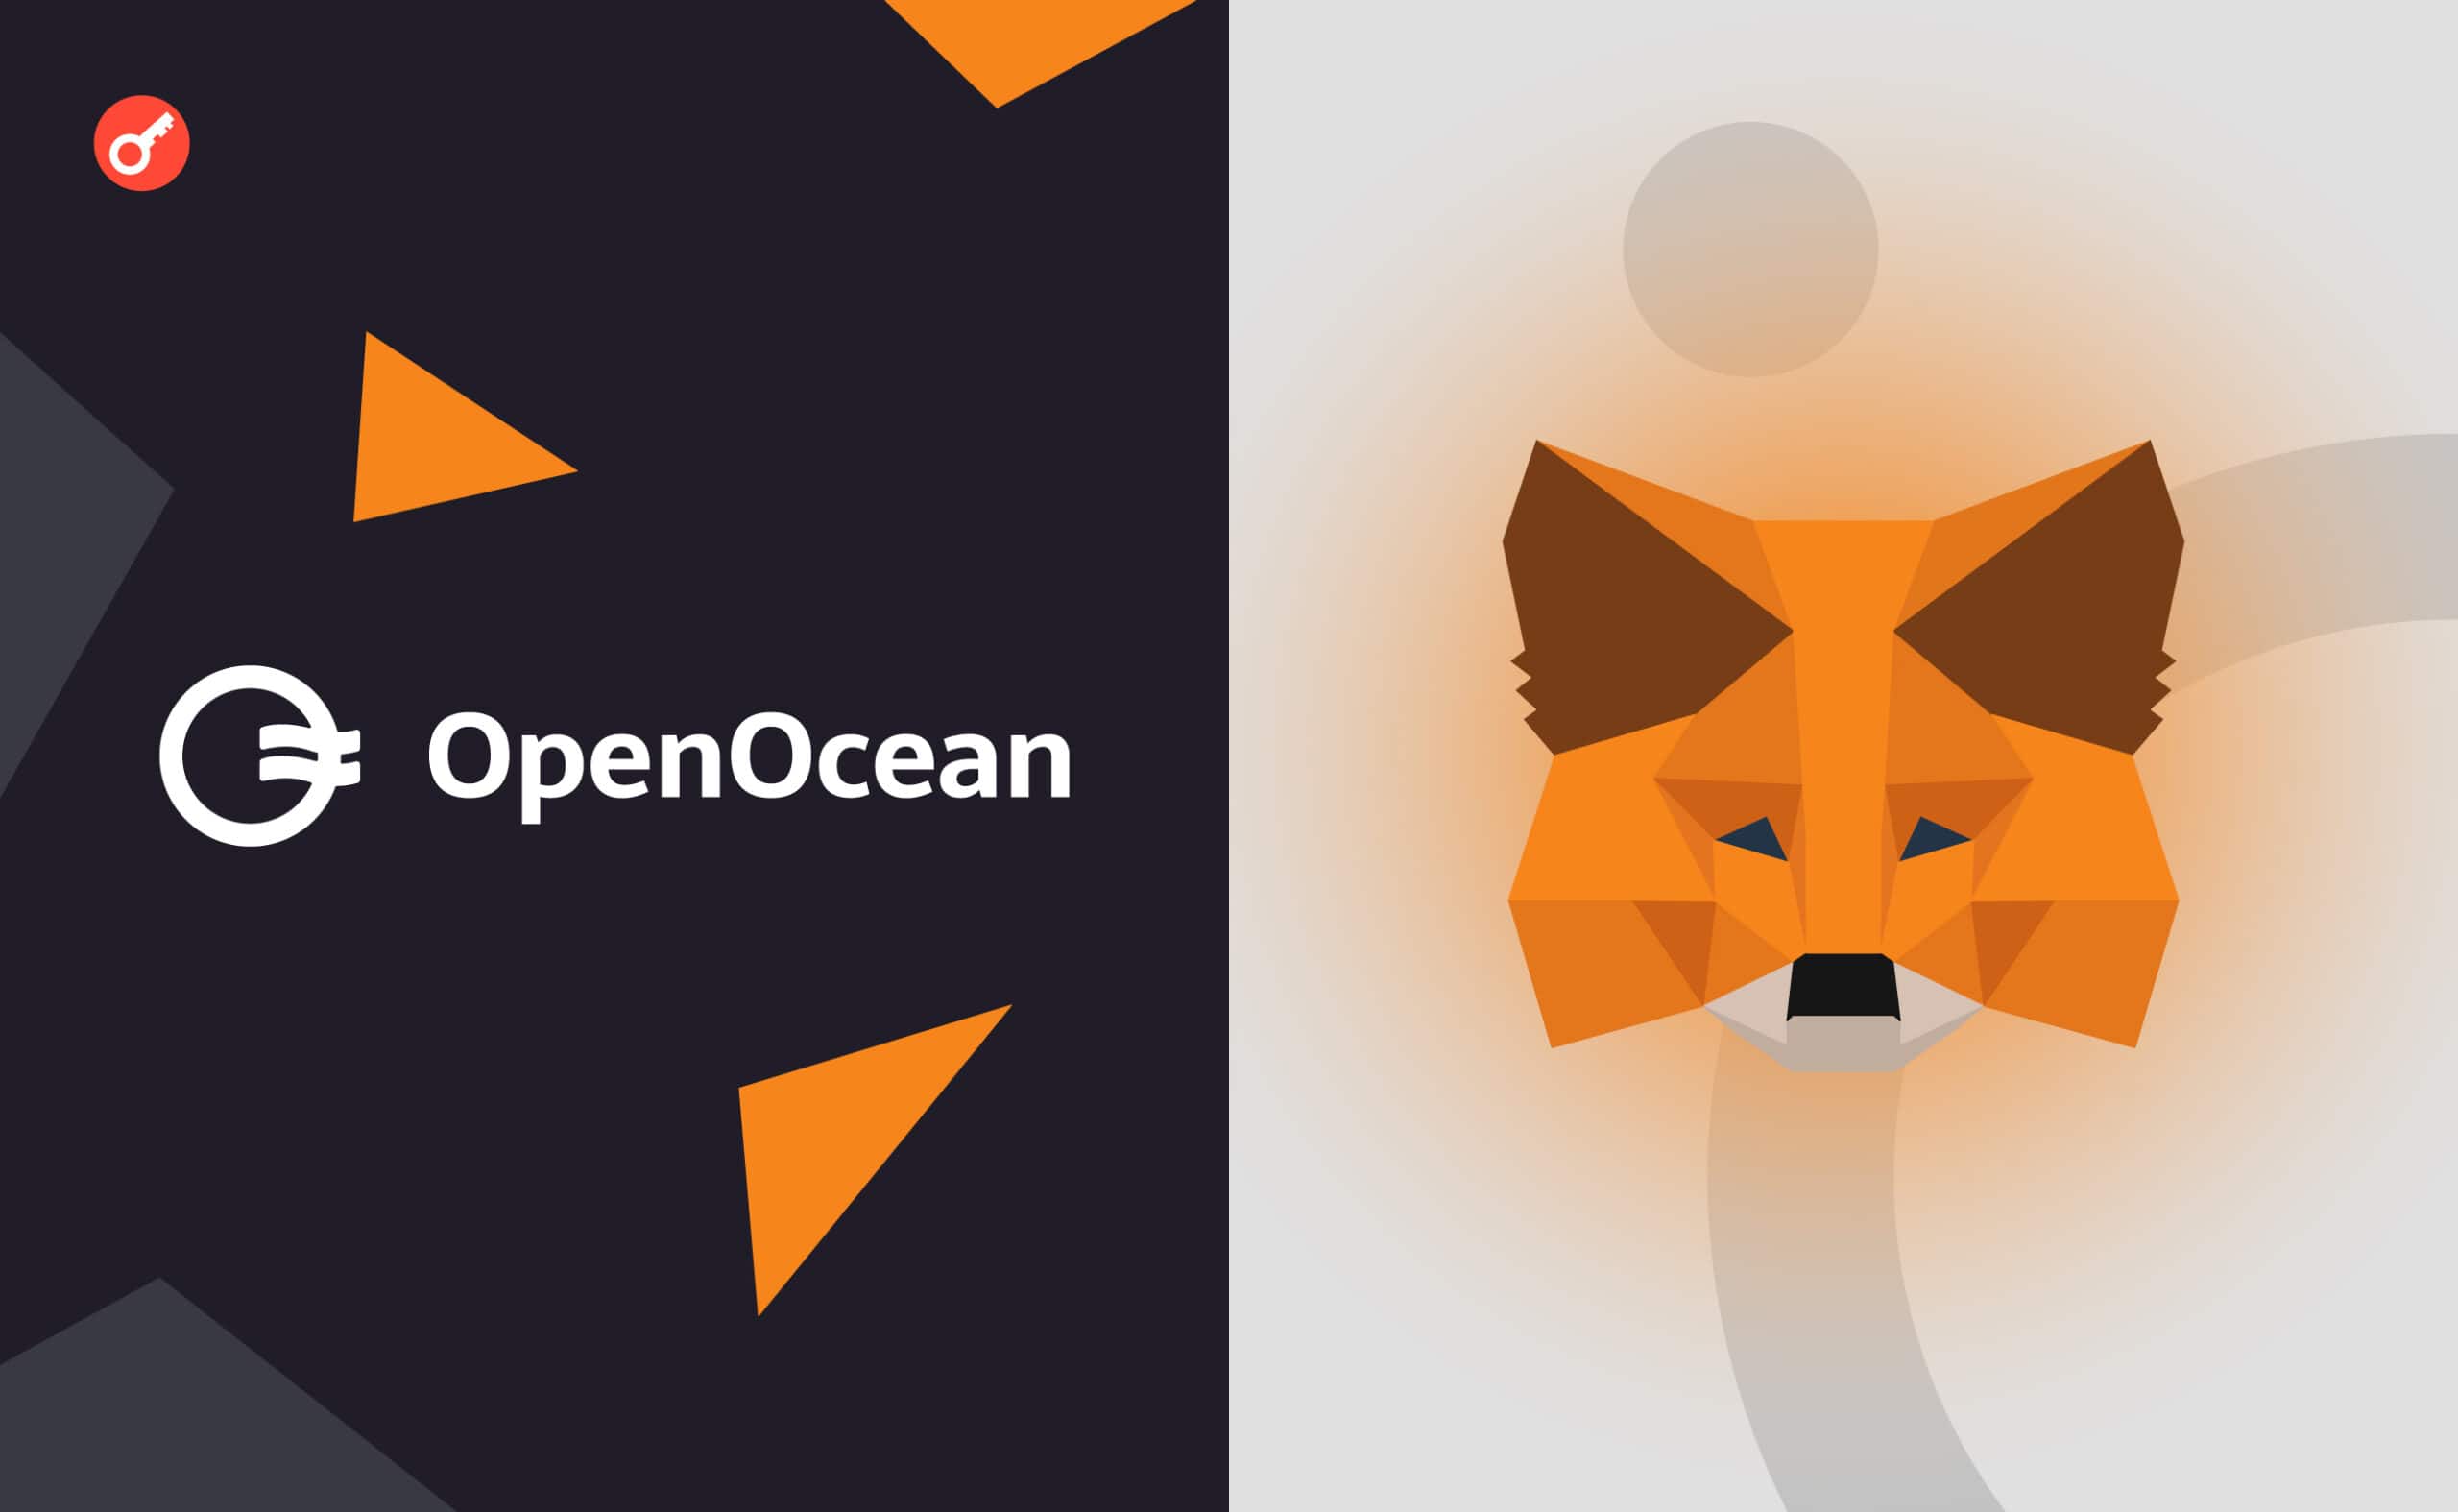 MetaMask Swaps інтегрував протокол OpenOcean. Головний колаж новини.